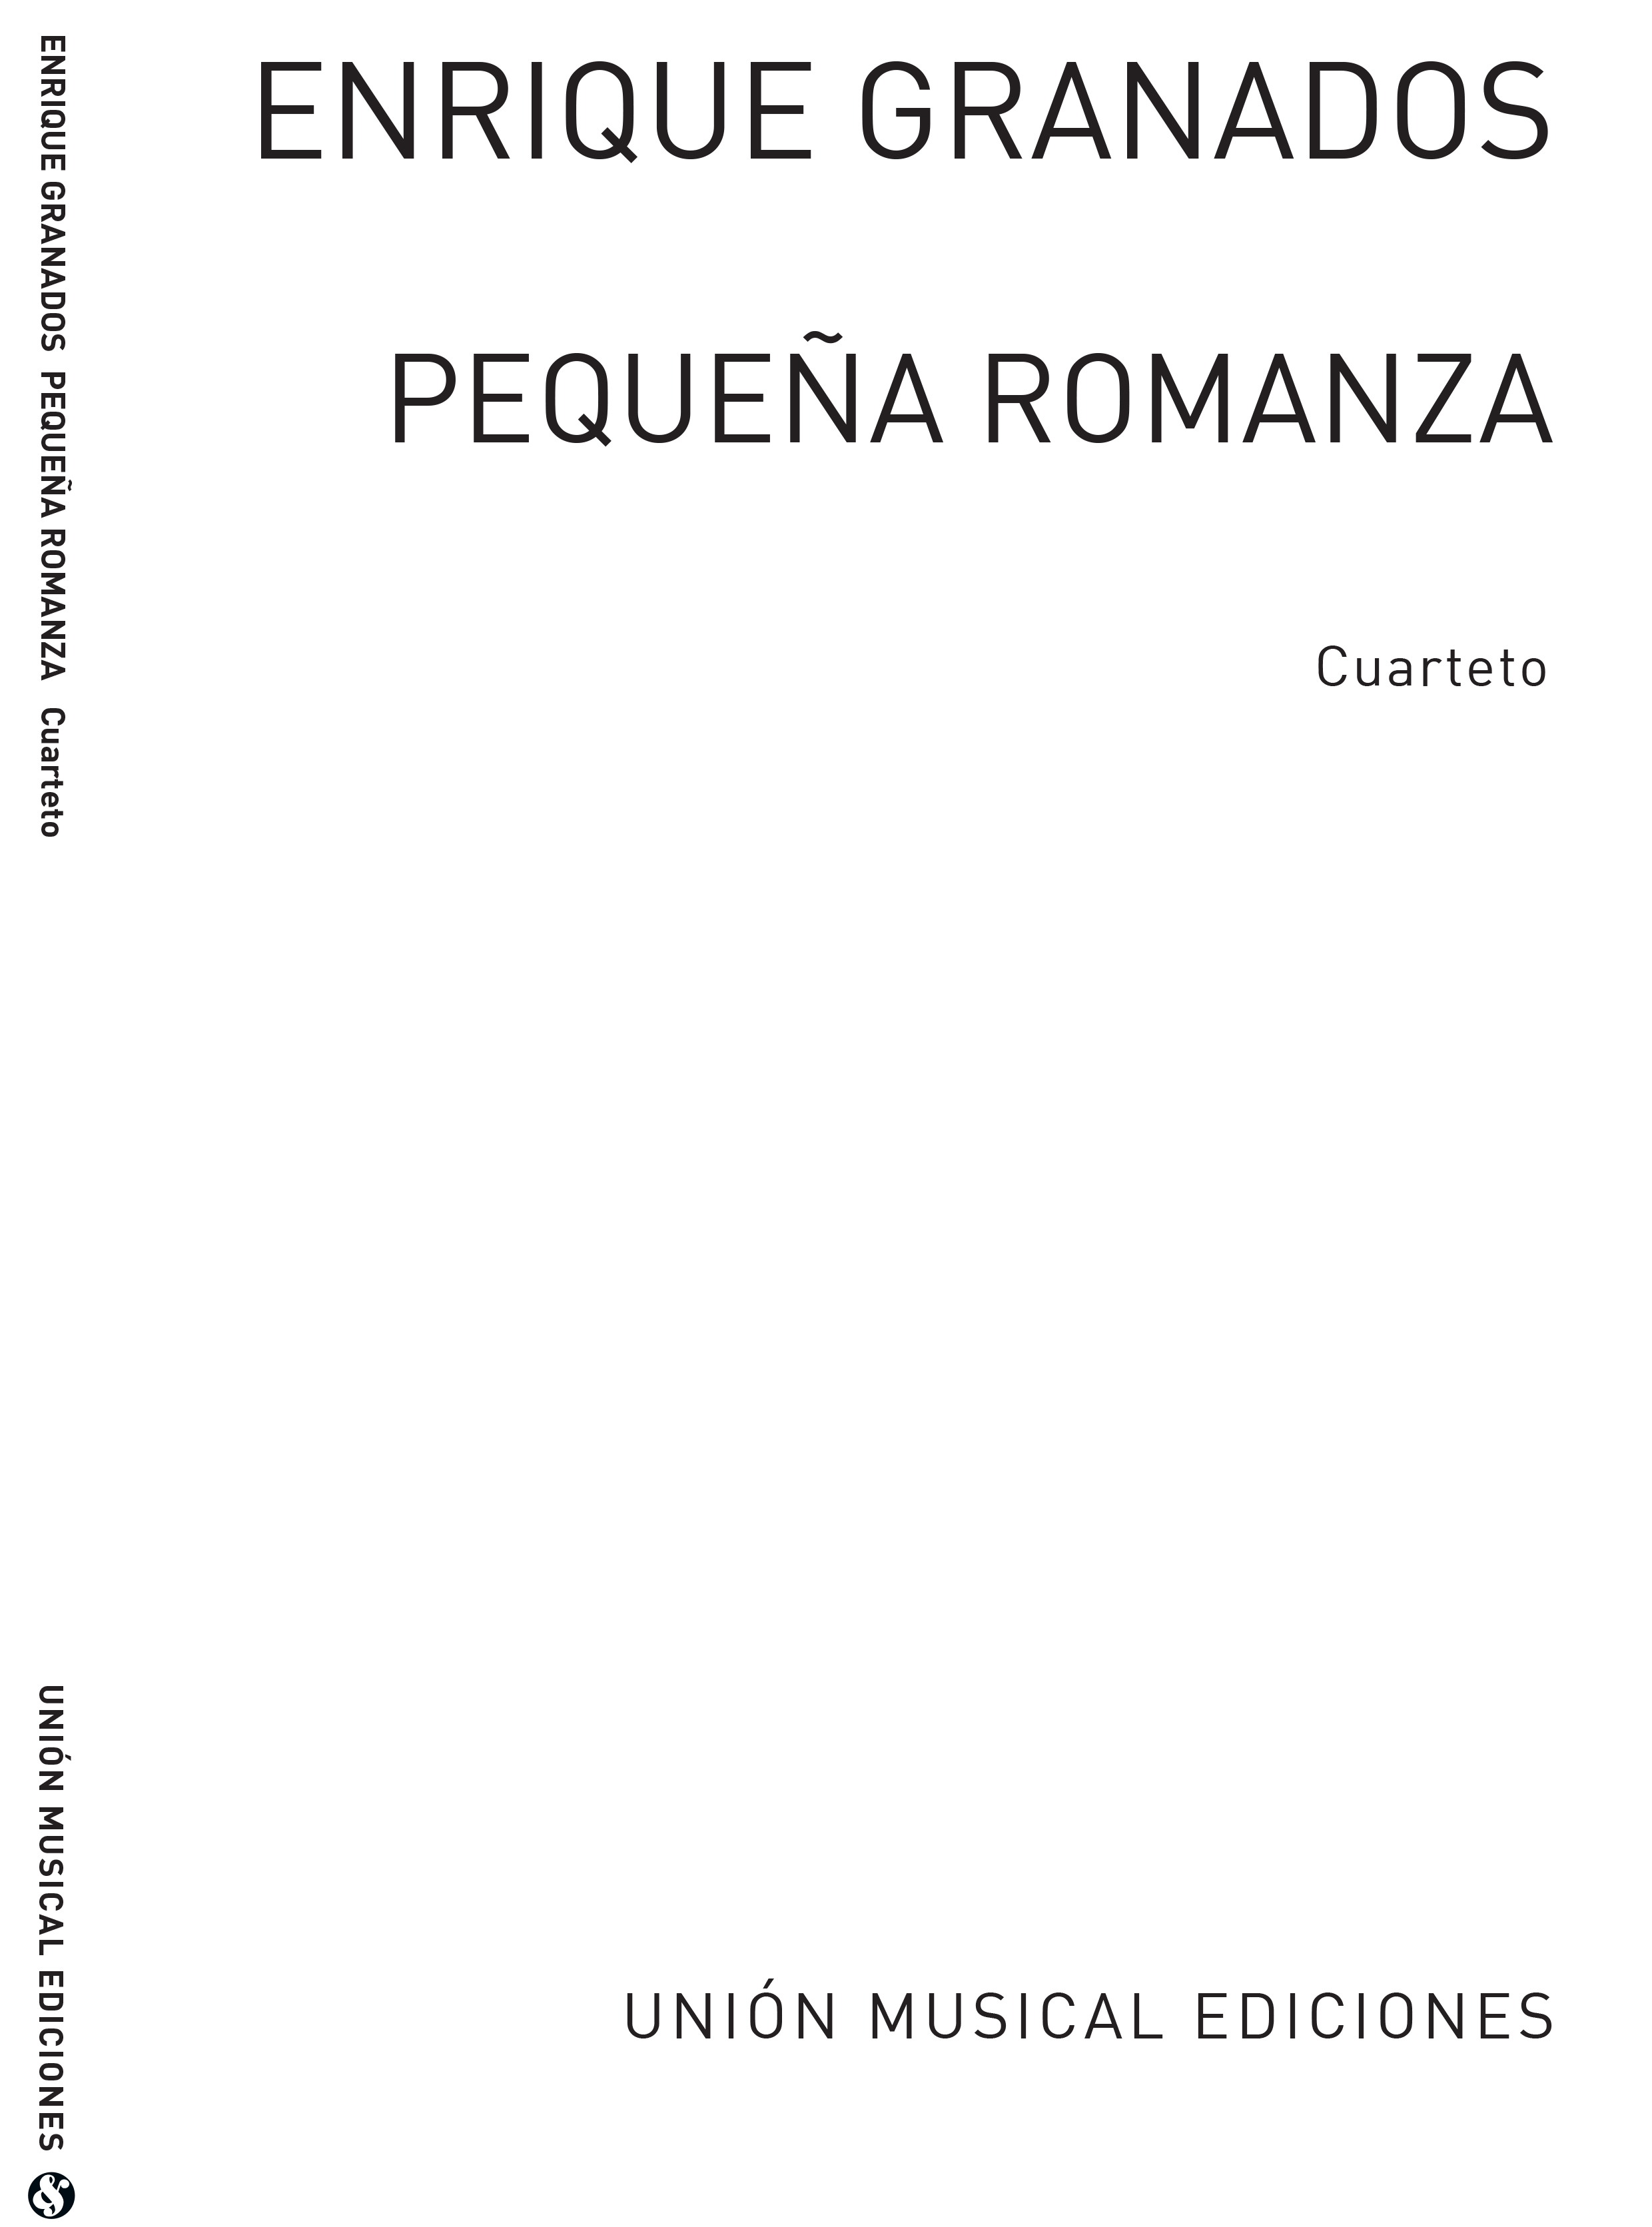 Enrique Granados: Pequena Romanza for String Quartet: String Quartet: Parts